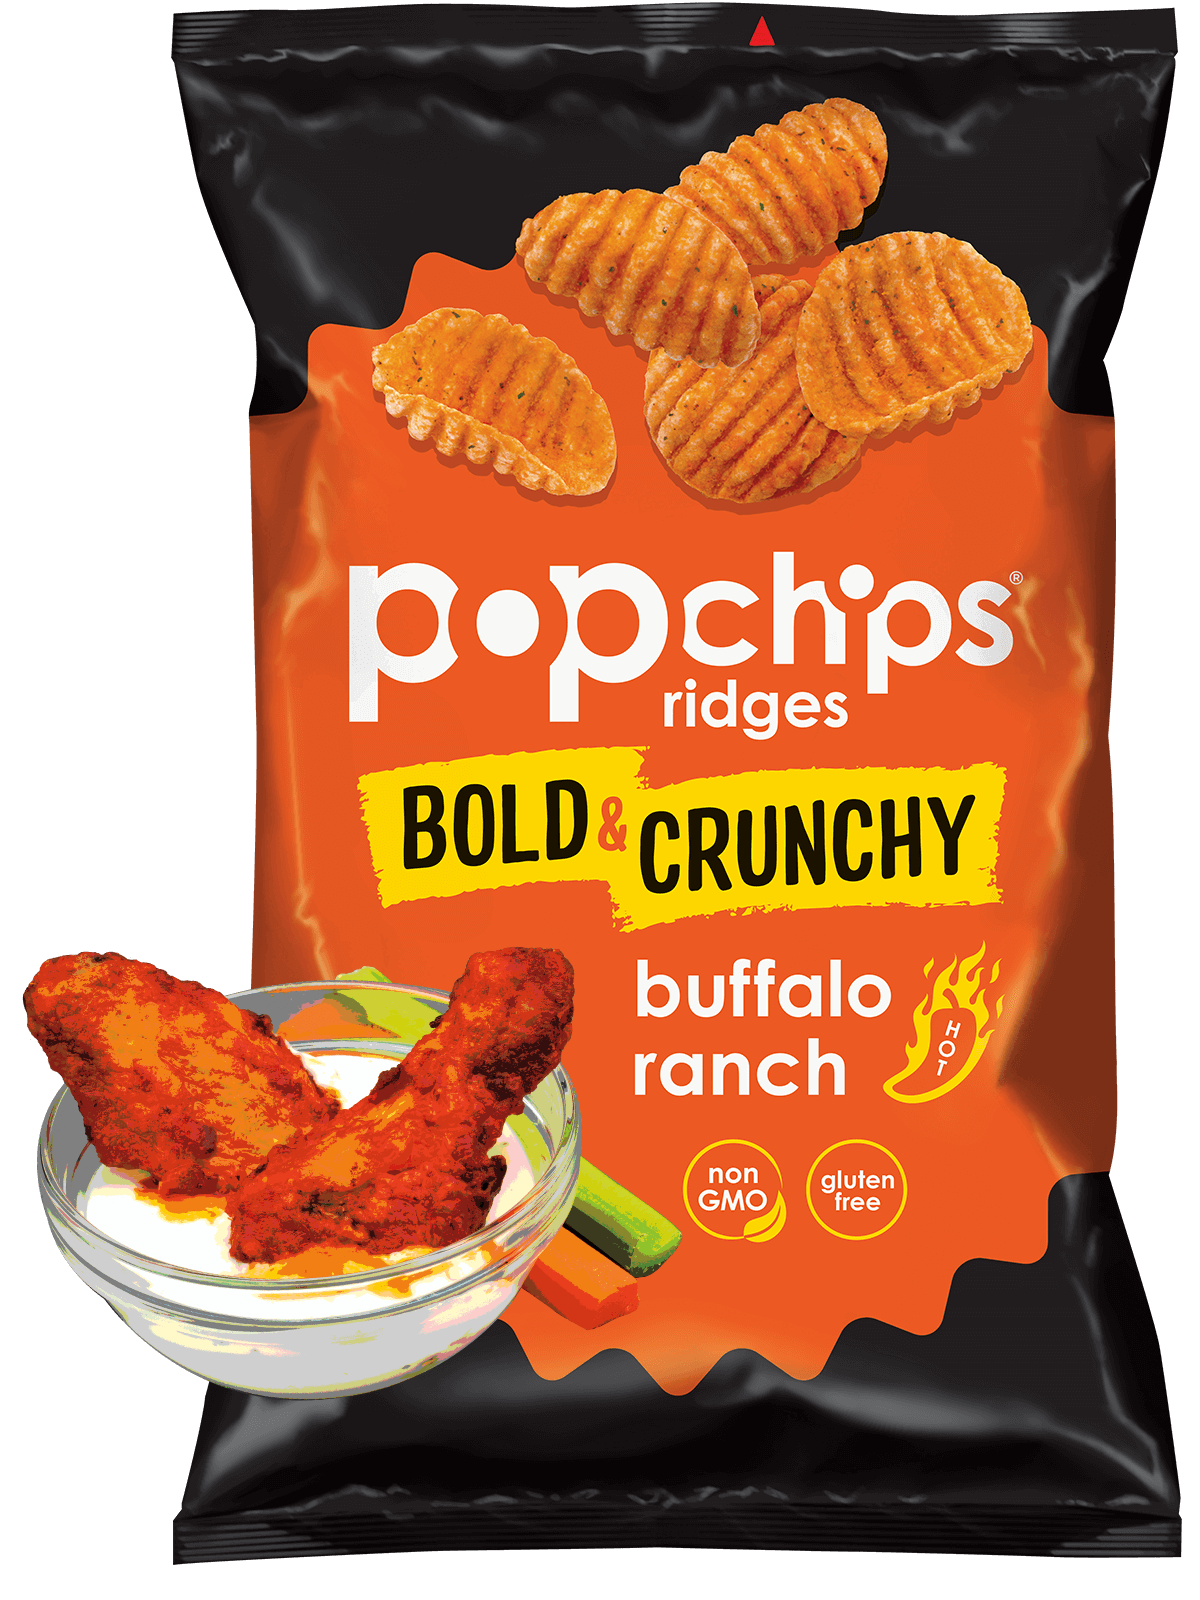 美國無麩質非油炸波浪薯片 - 水牛醬料風味 "POPCHIPS" Gluten Free Potato Ridges - Buffalo Ranch